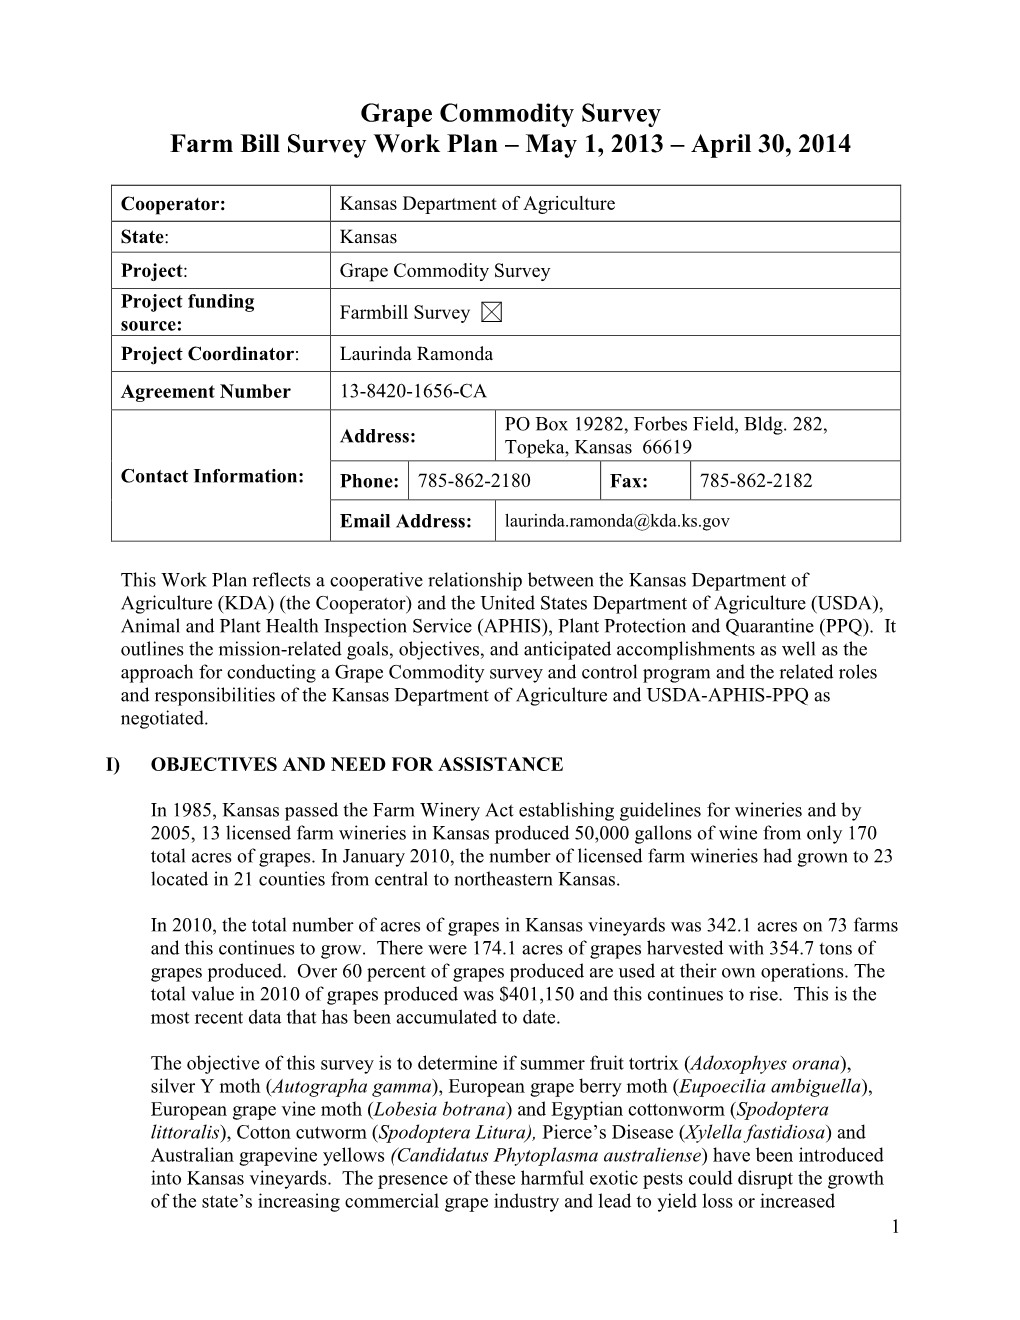 Grape Commodity Survey Farm Bill Survey Work Plan – May 1, 2013 – April 30, 2014